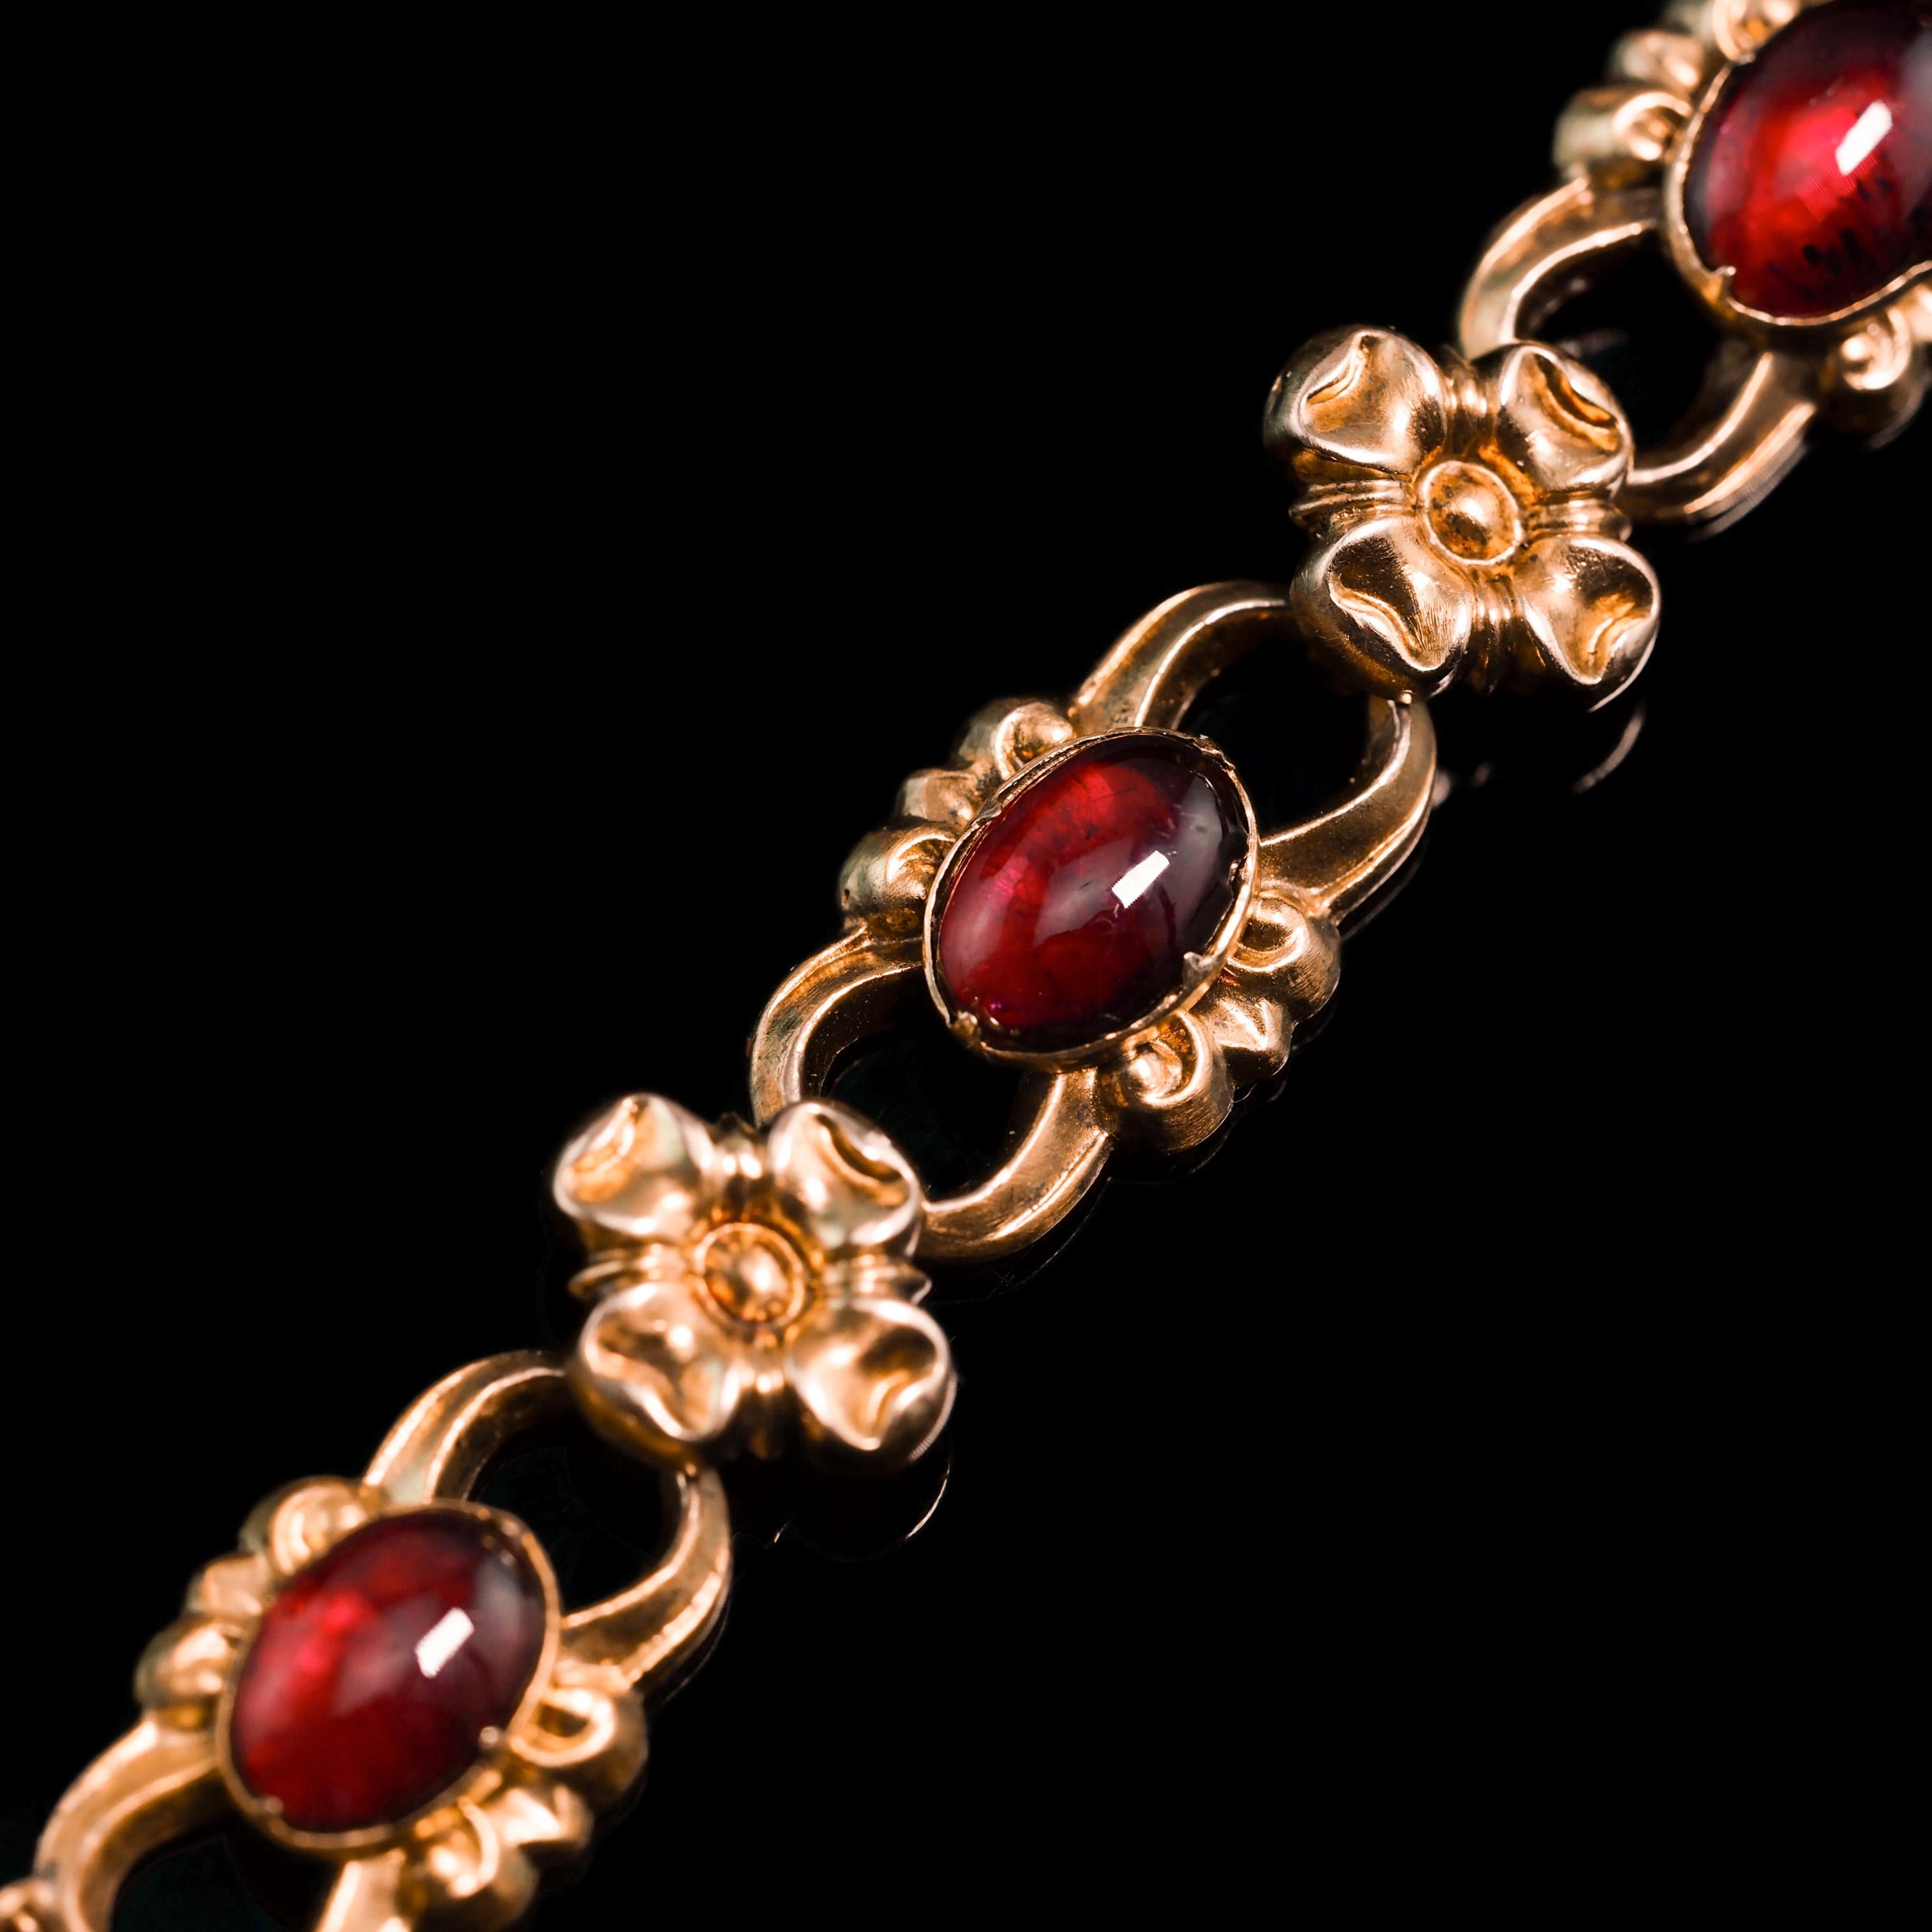 Antique Garnet Bracelet Victorian 18k Gold Cabochon Floral Design, circa 1840 For Sale 5